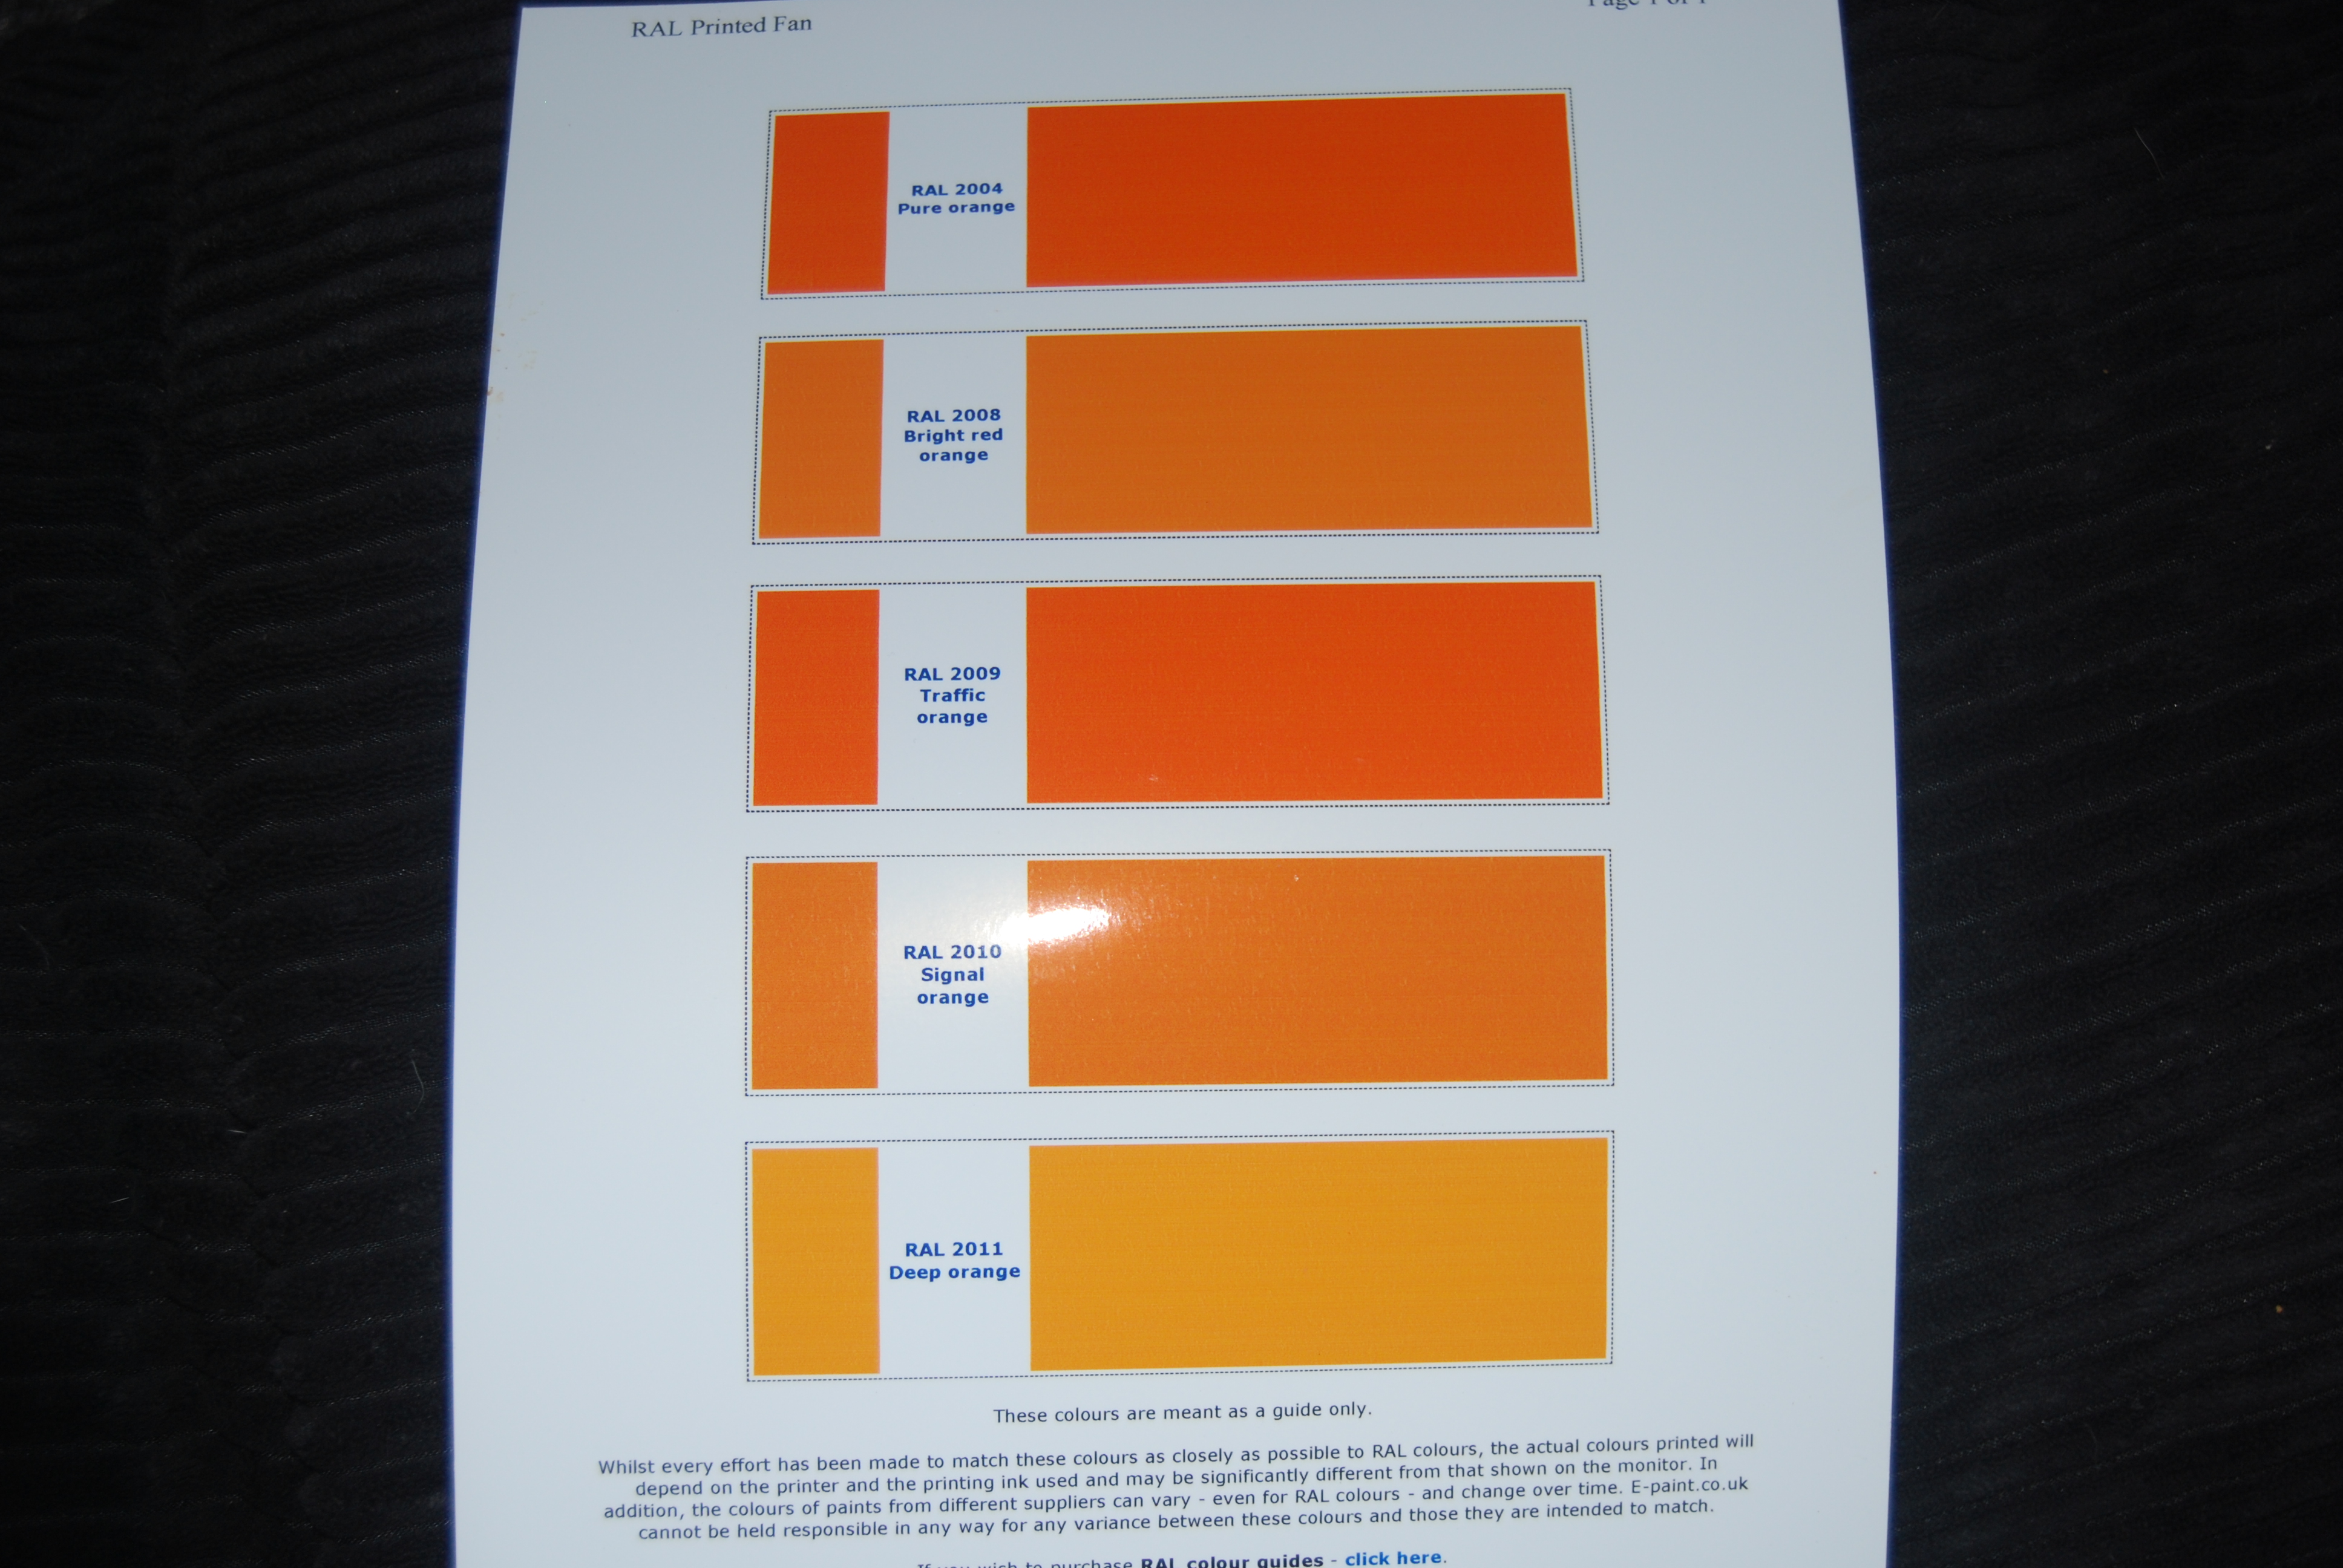 Ford signal orange paint